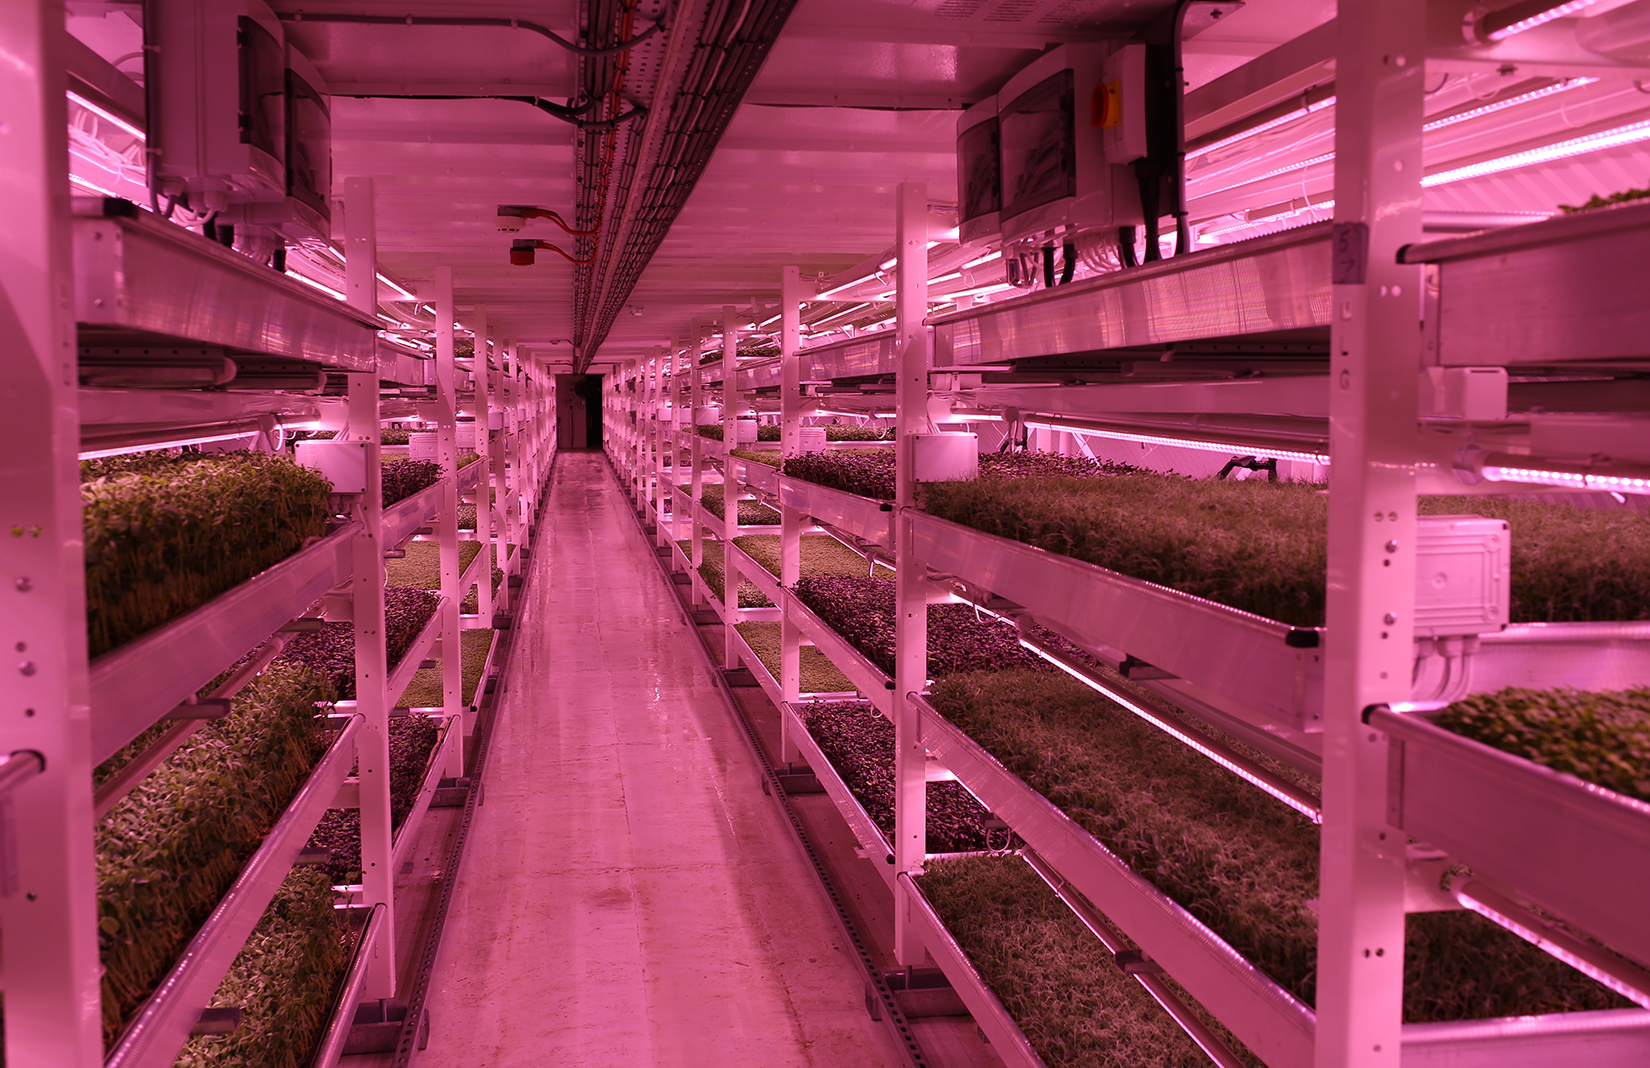 London's first ever underground farm